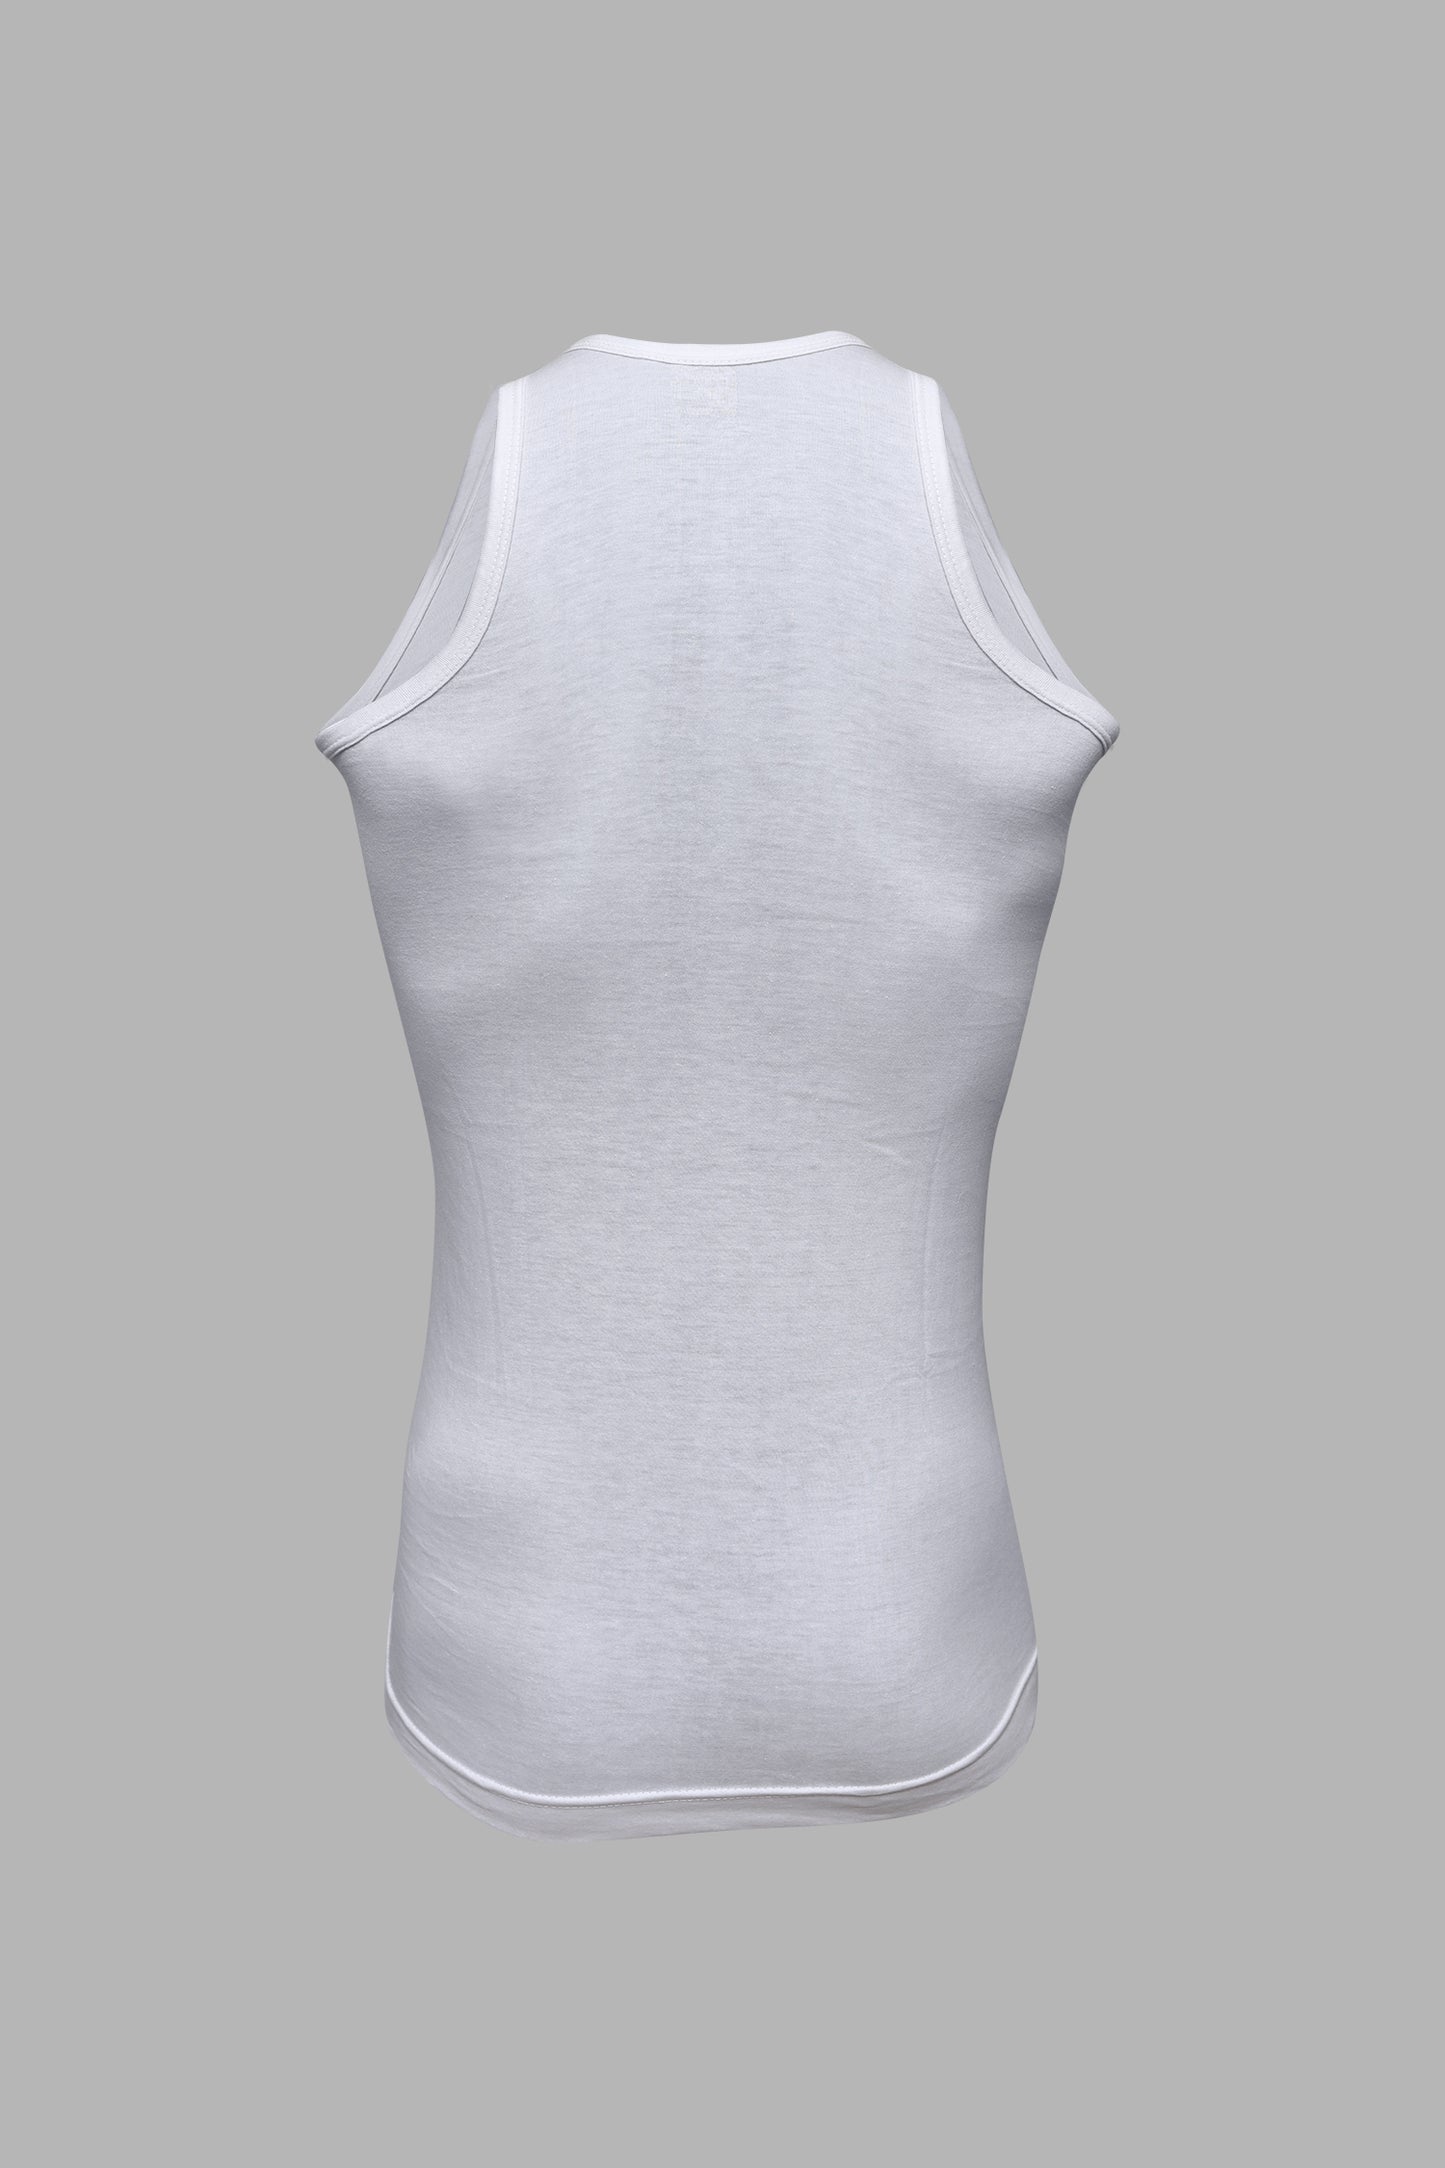 ARINO® Single Jersey Fabric Sleeveless Men's Vest (Summer Queen)